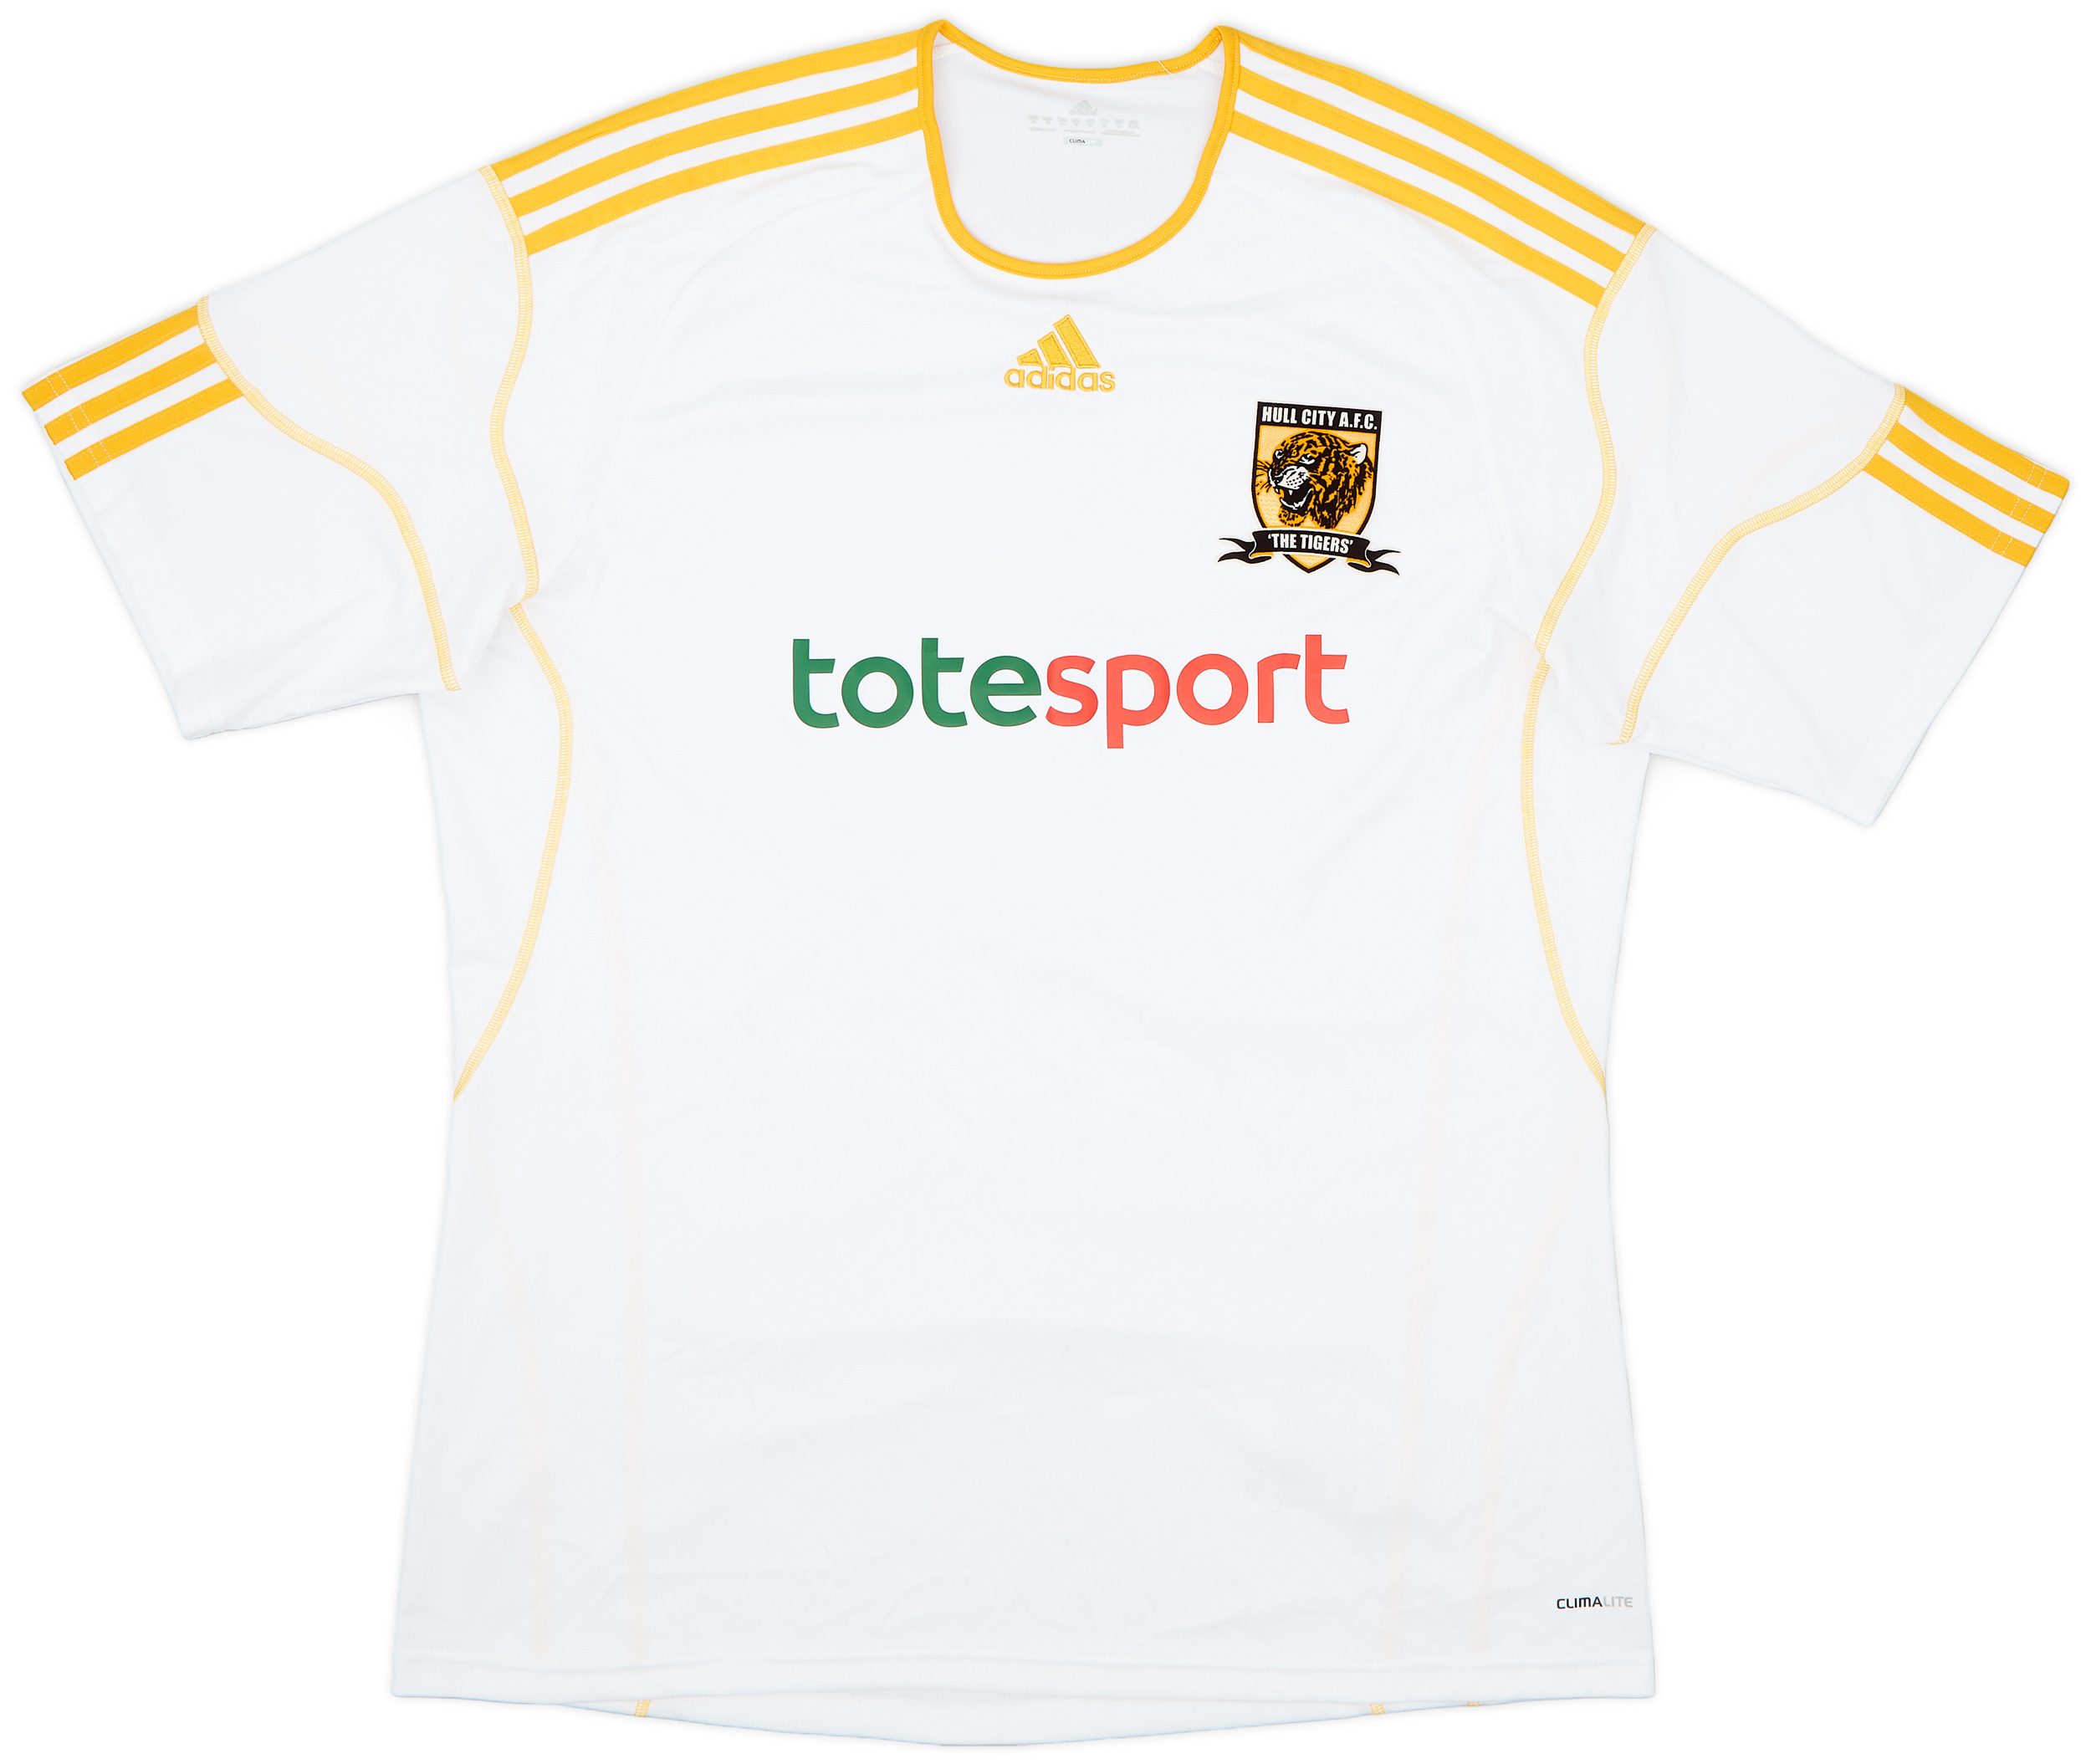 2010-11 Hull City Away Shirt - 9/10 - ()